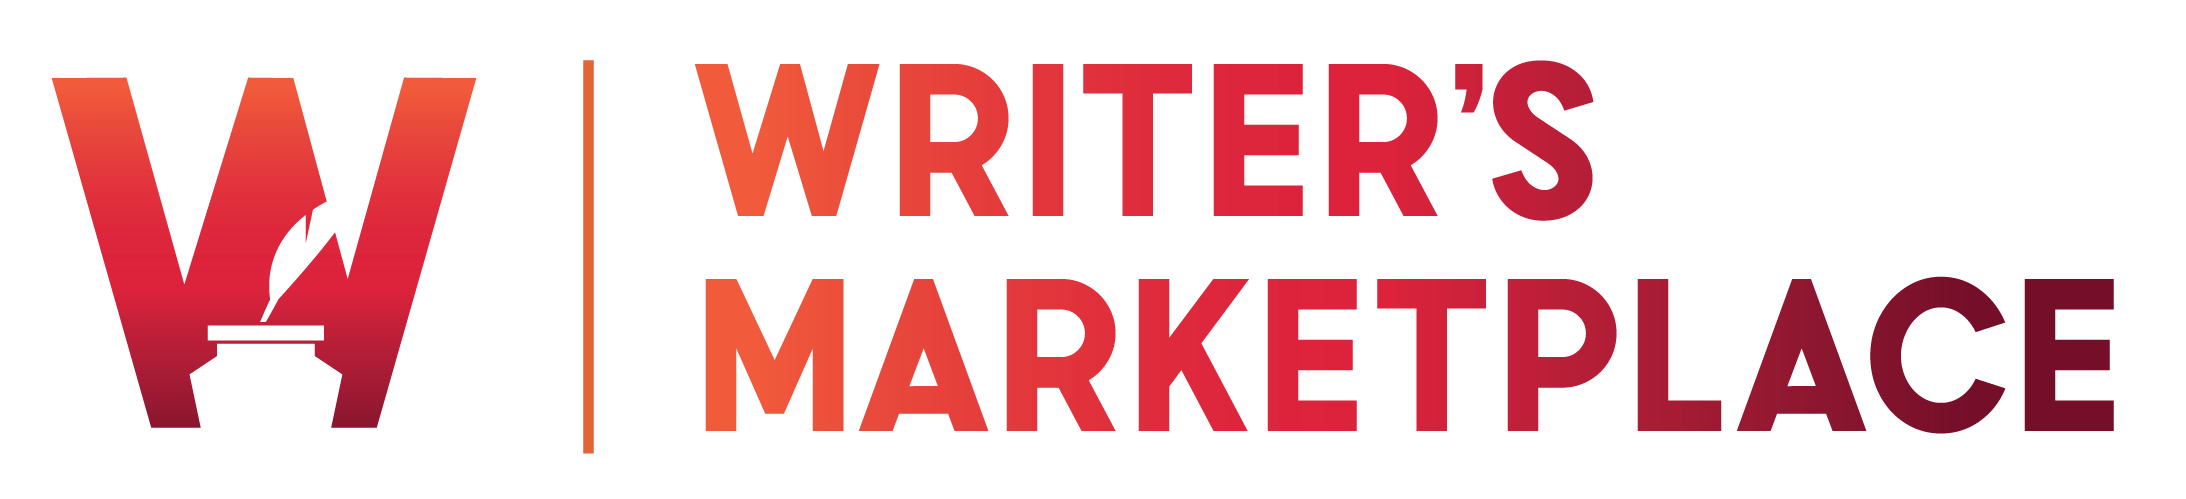 Writer's Marketplace